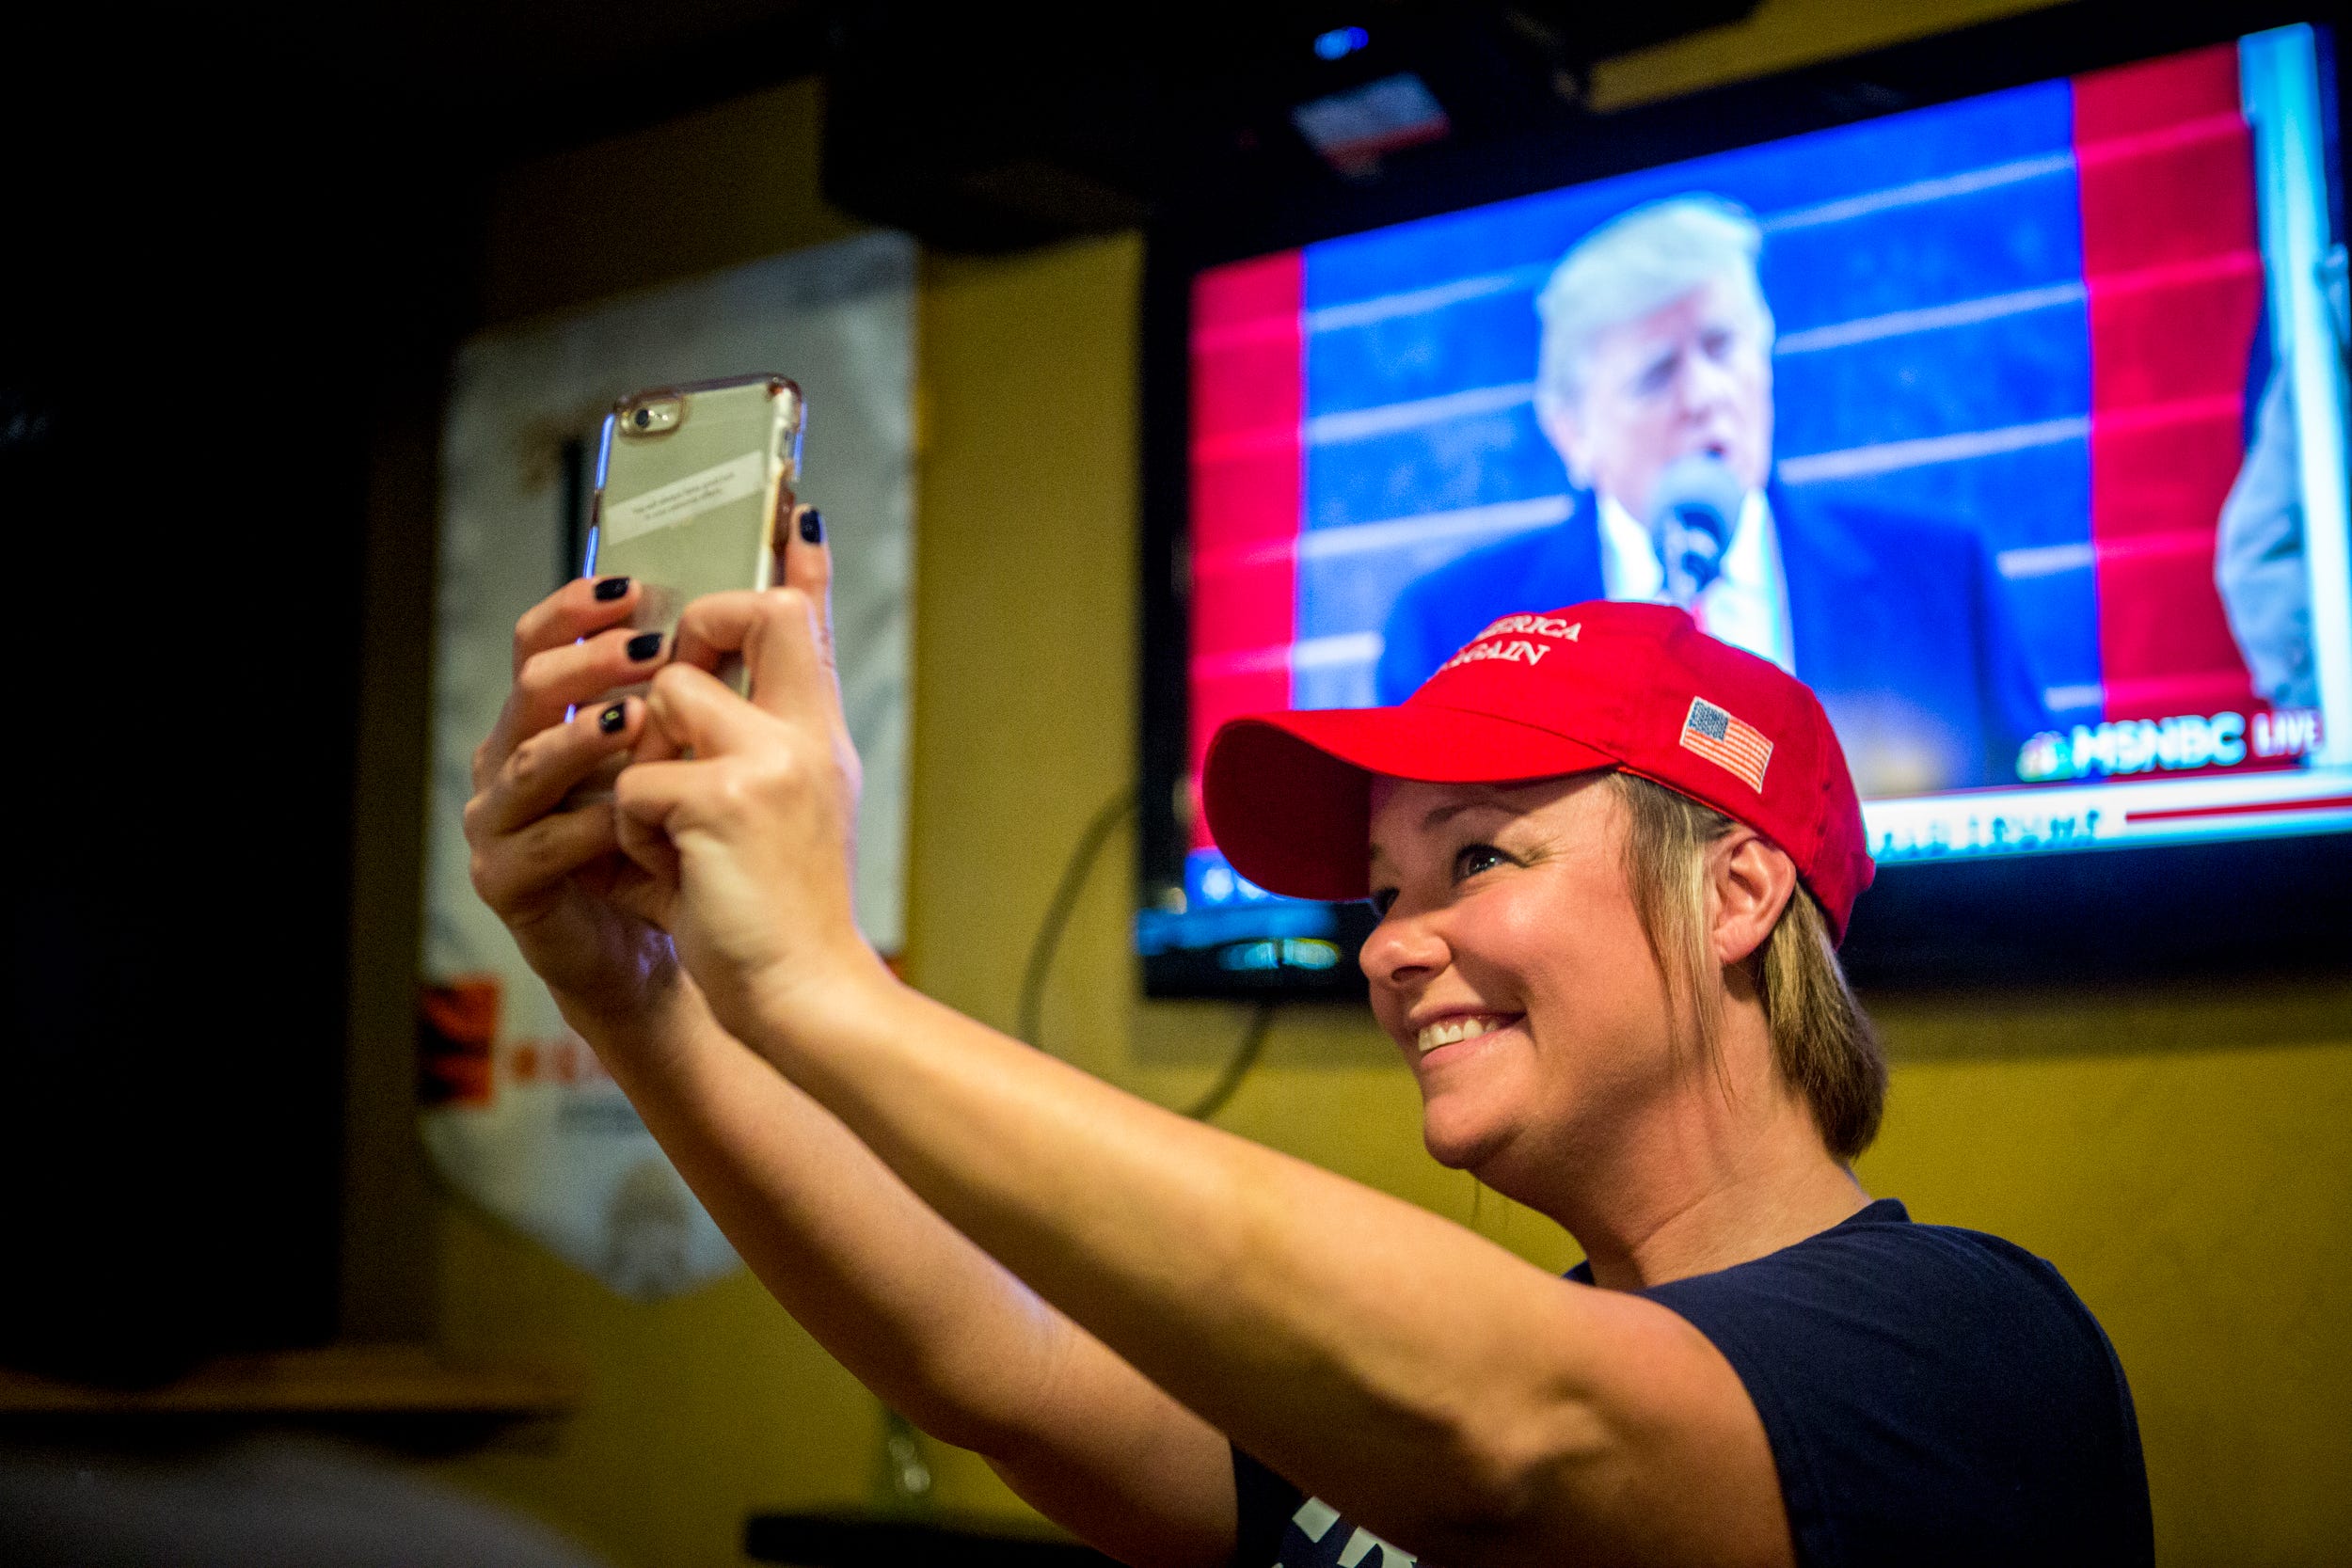 Shots and selfies start Trump's term in Northern Kentucky